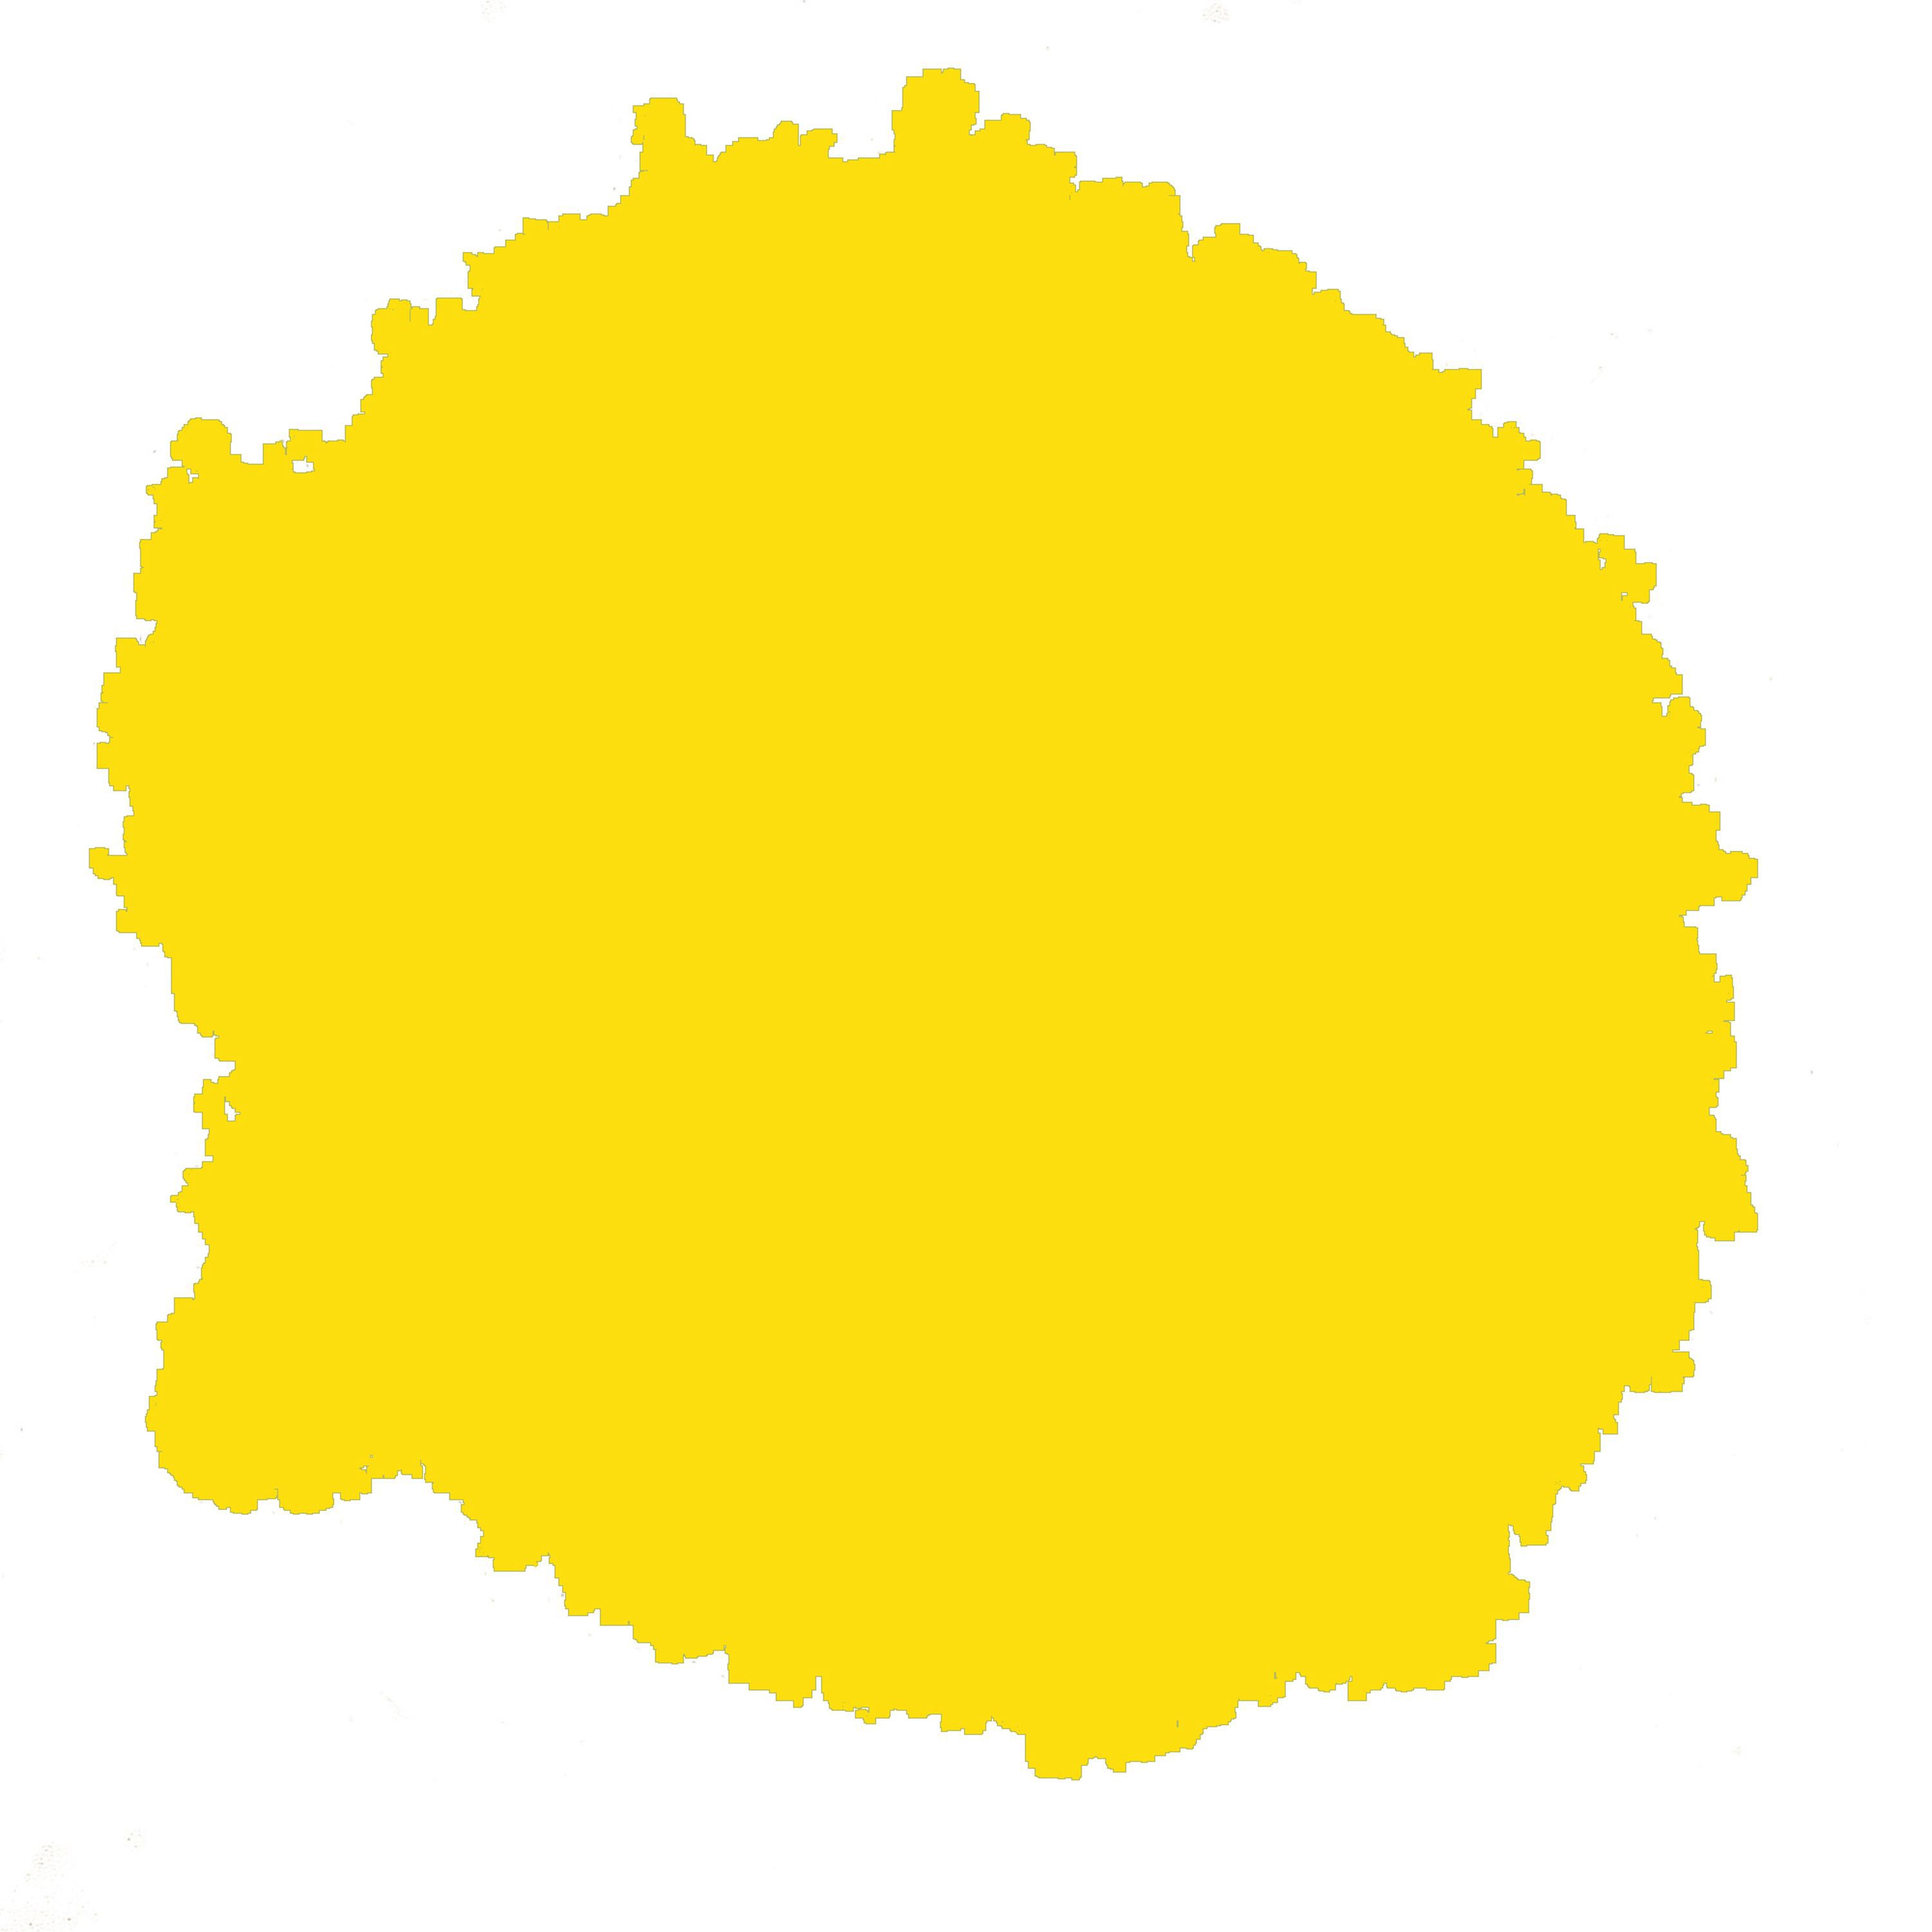 Rust-Oleum Universal Canary yellow Gloss Multi-surface Spray paint, 400ml